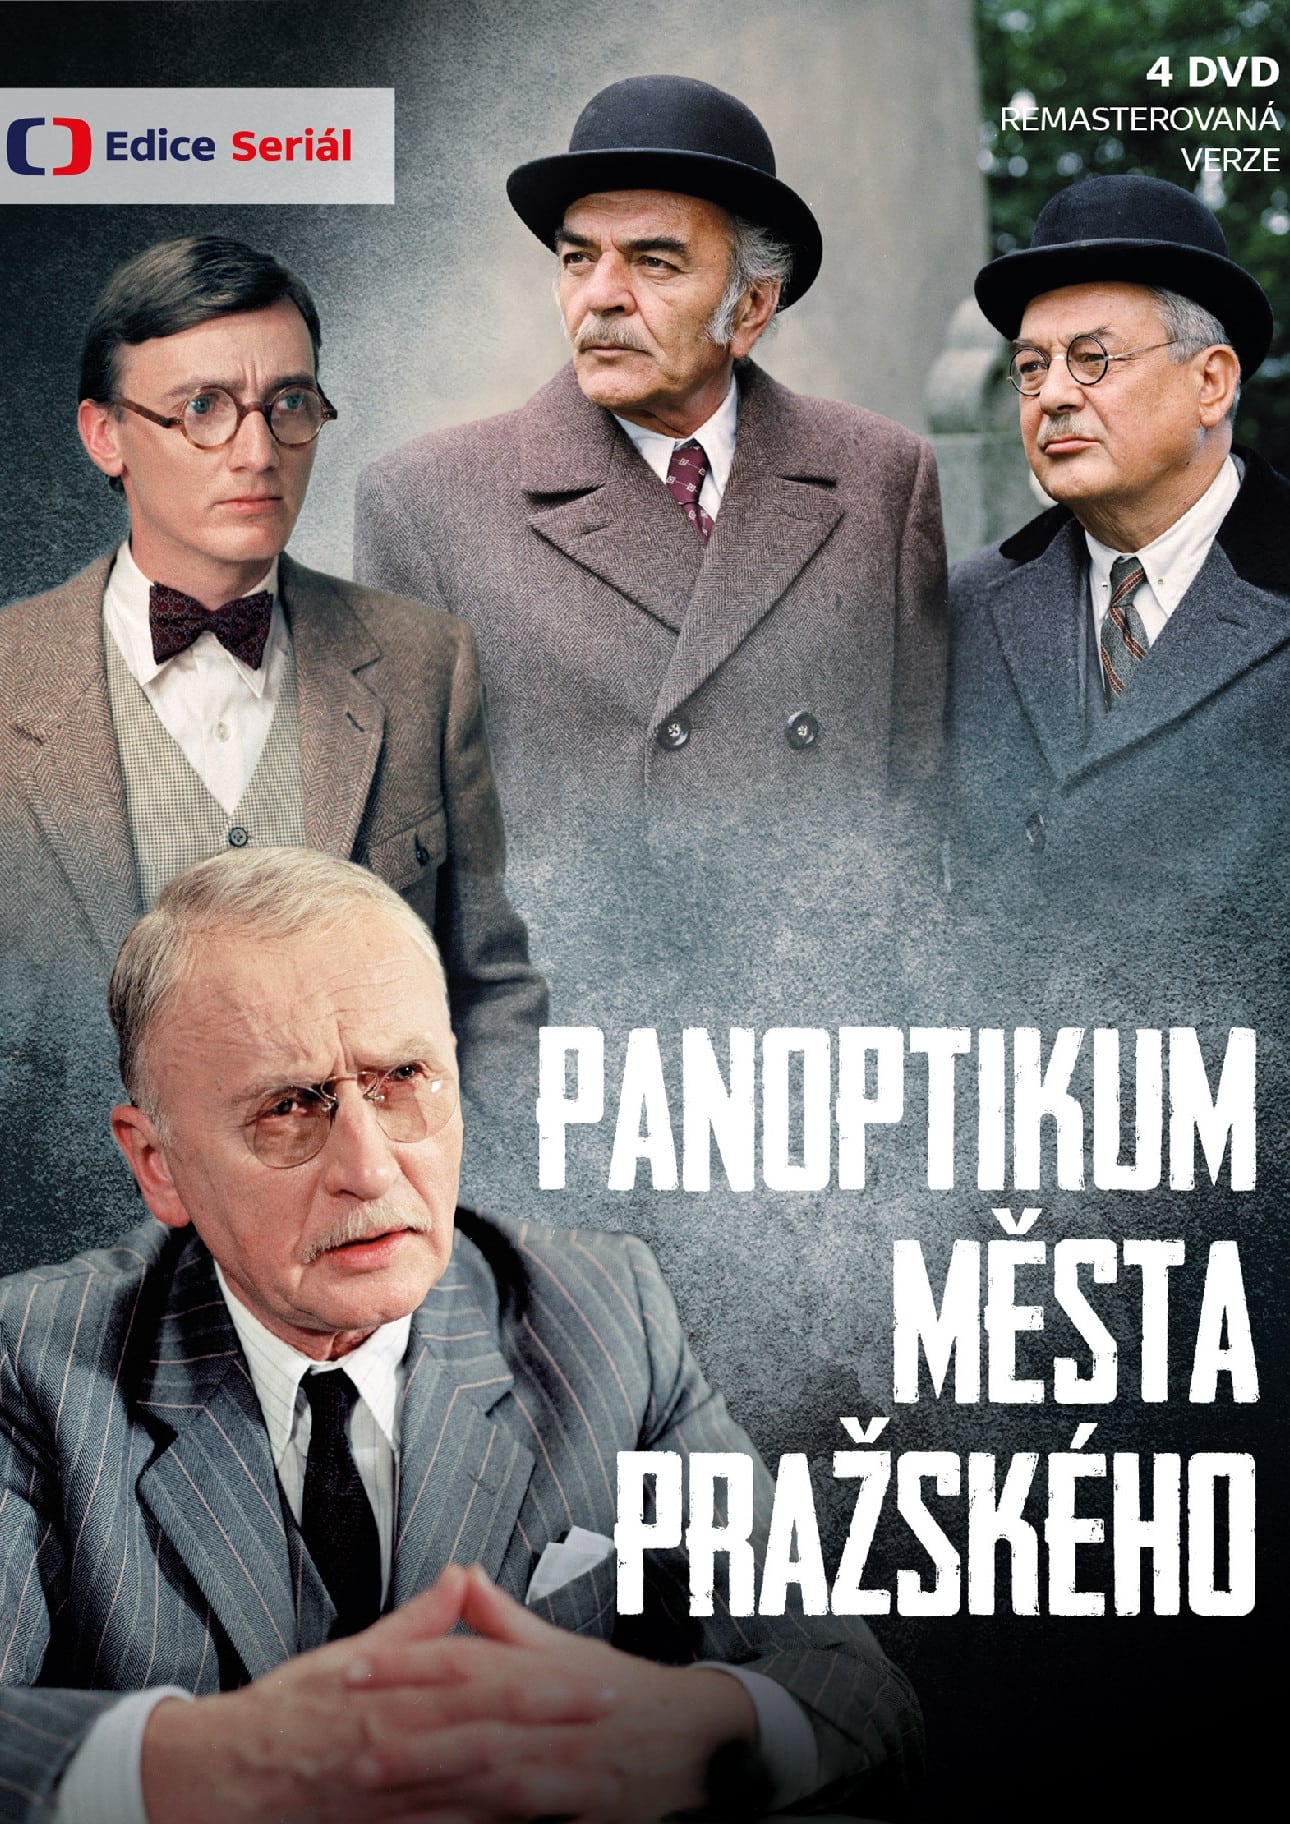 plakát seriálu Panoptikum Města pražského